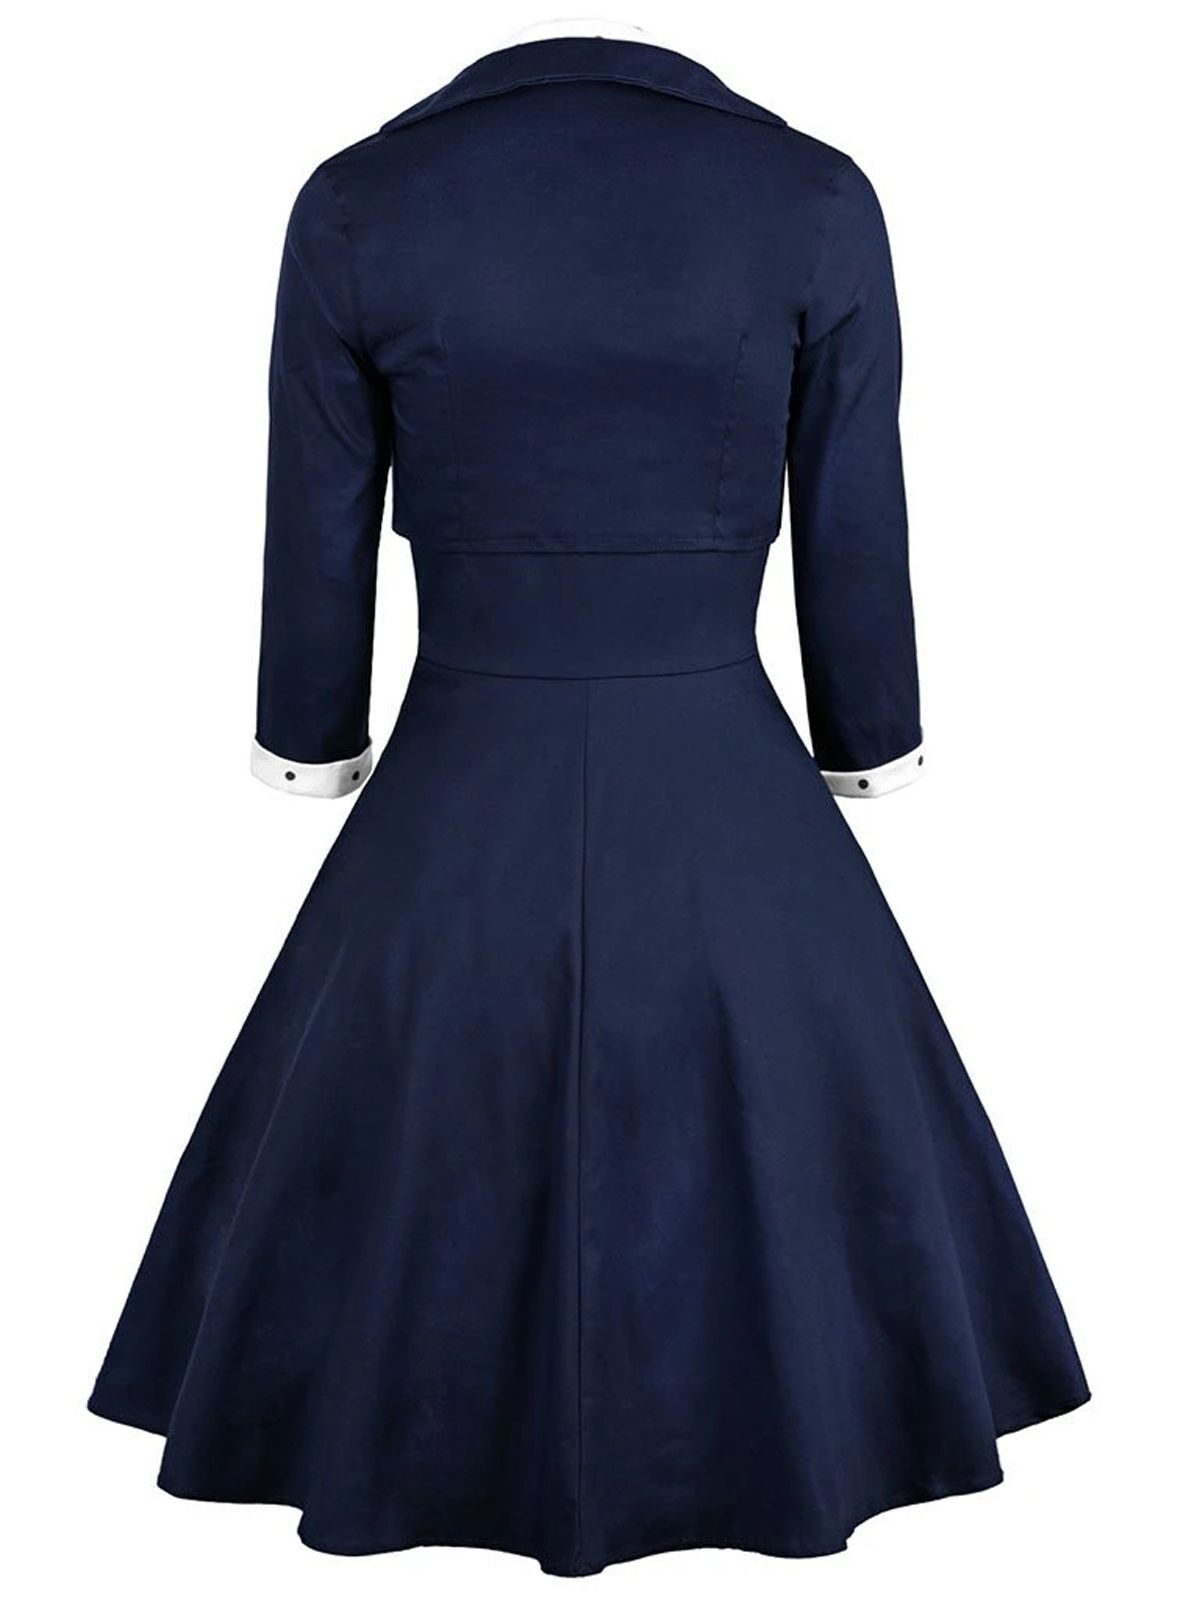 2PCS Navy 1950s Polka Dot Swing Dress